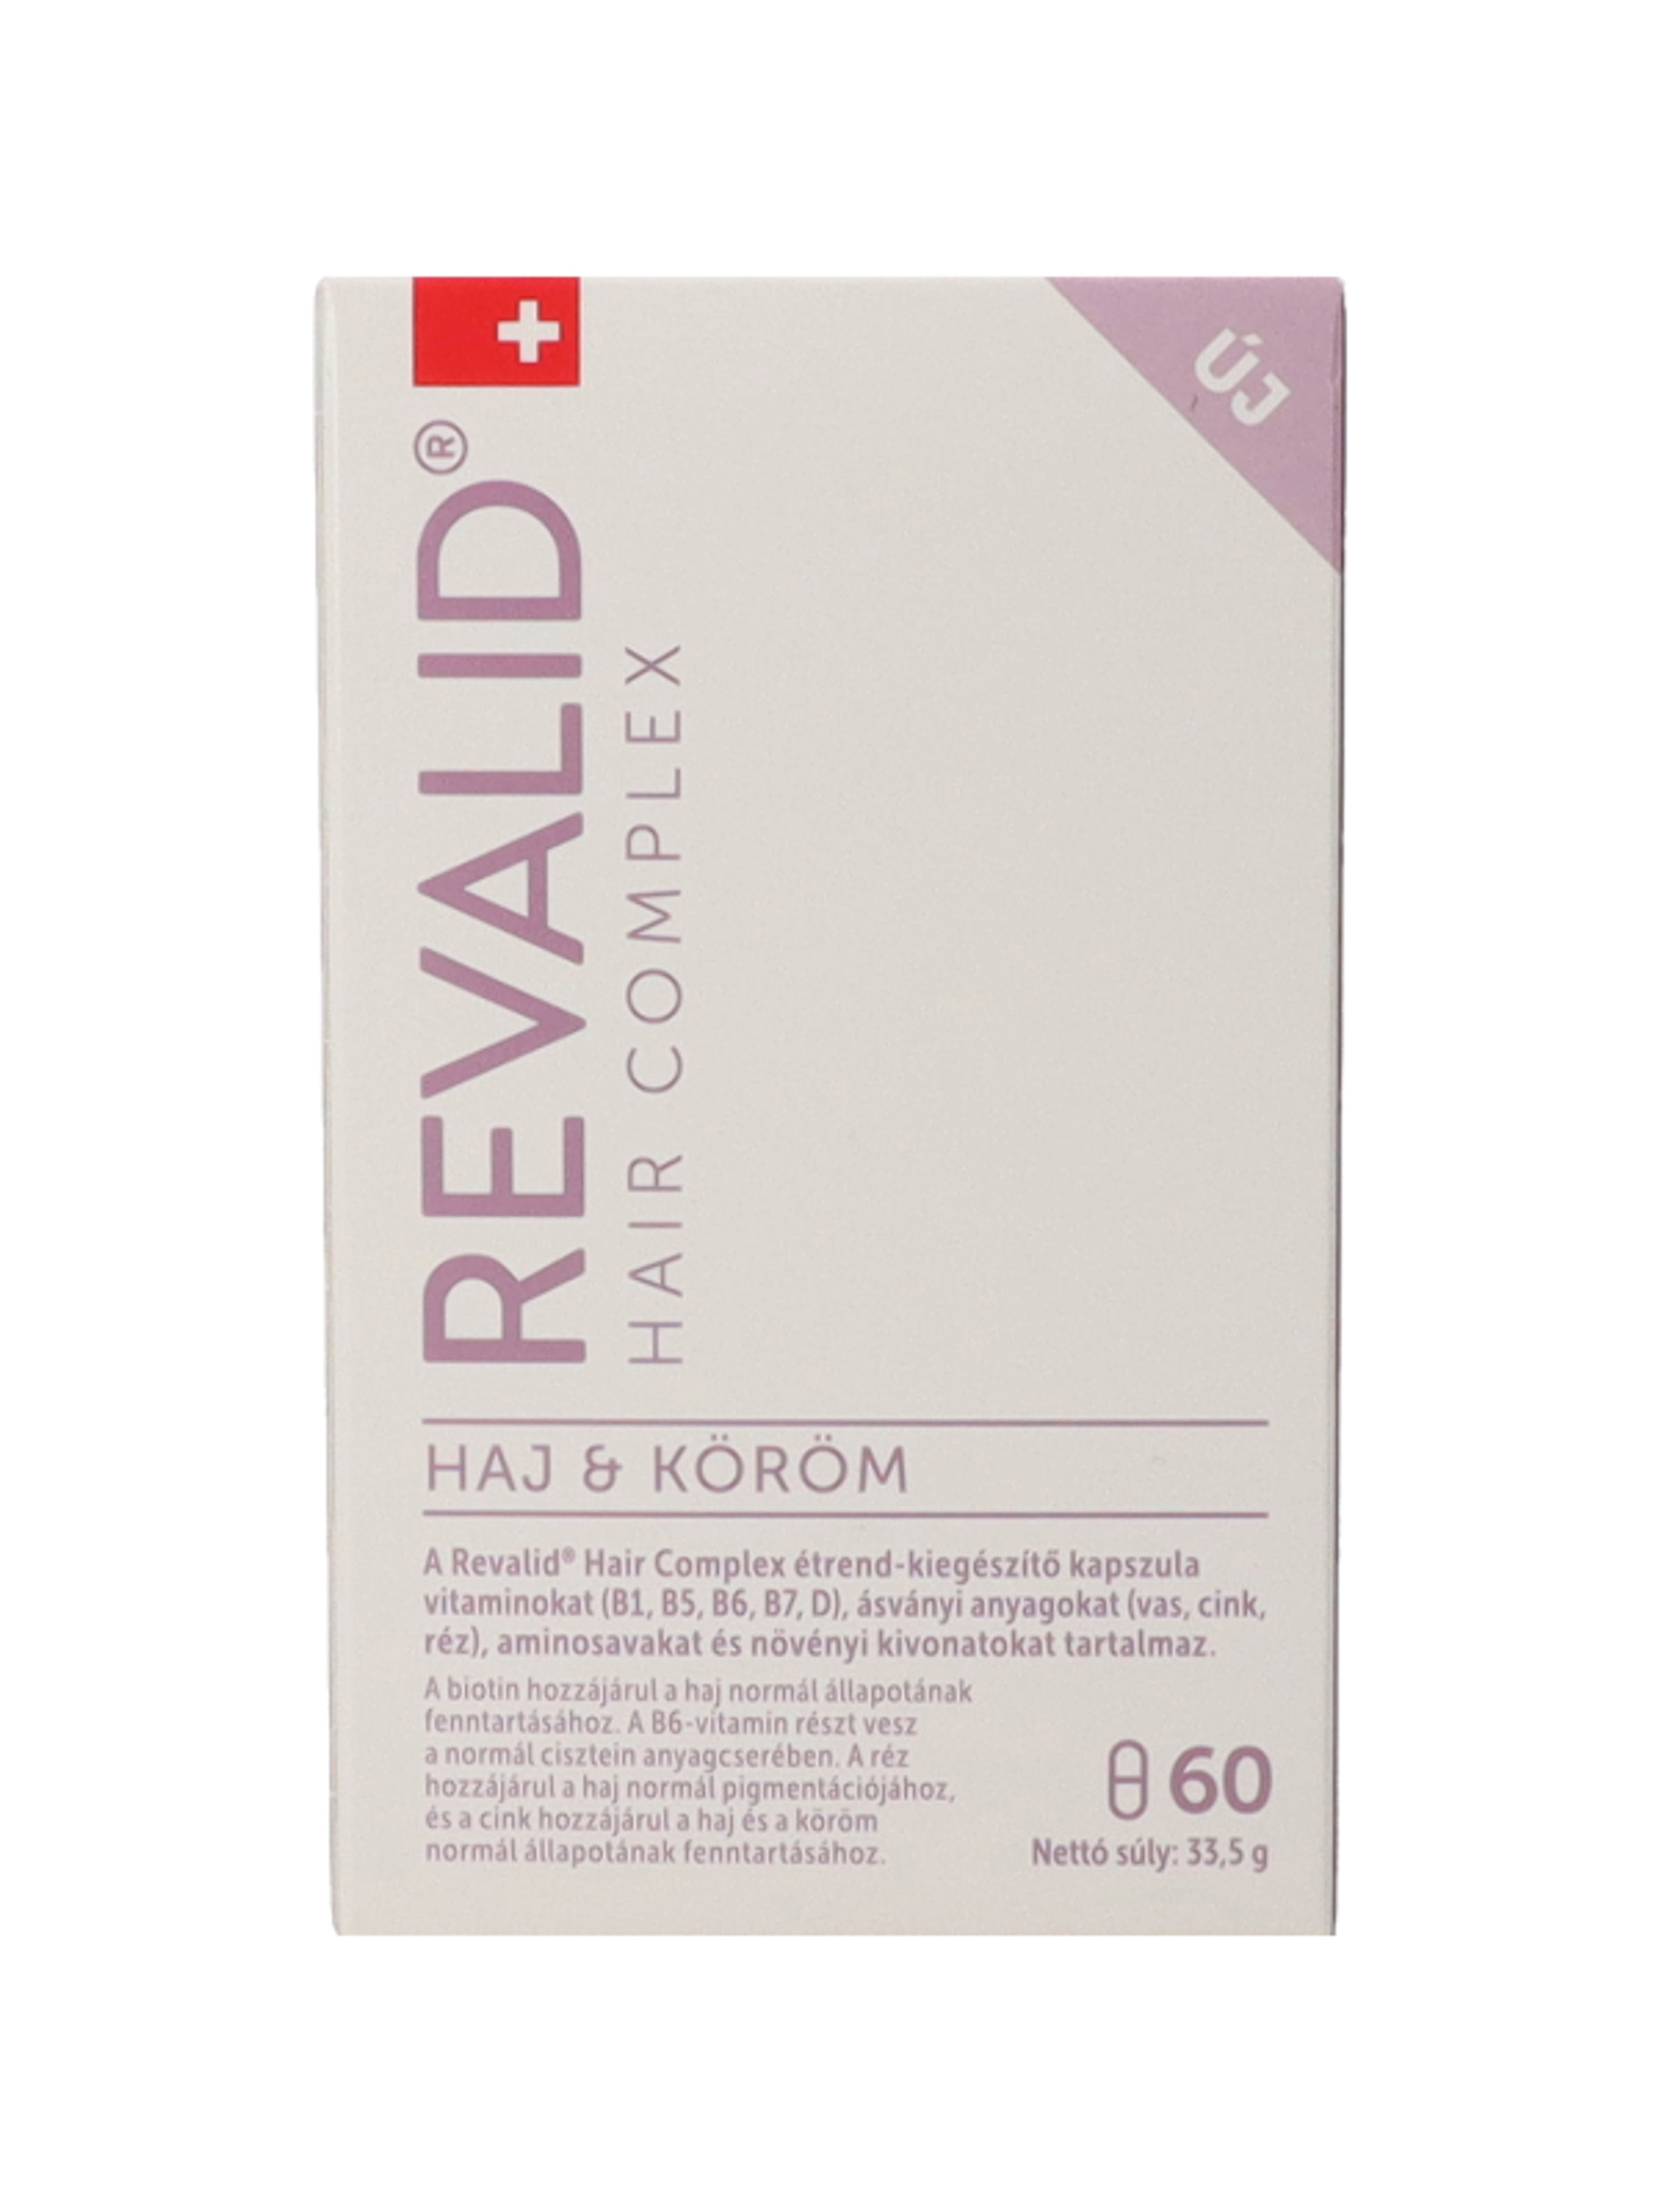 Revalid hair complex étrend-kiegészítő kapszula - 60 db-1